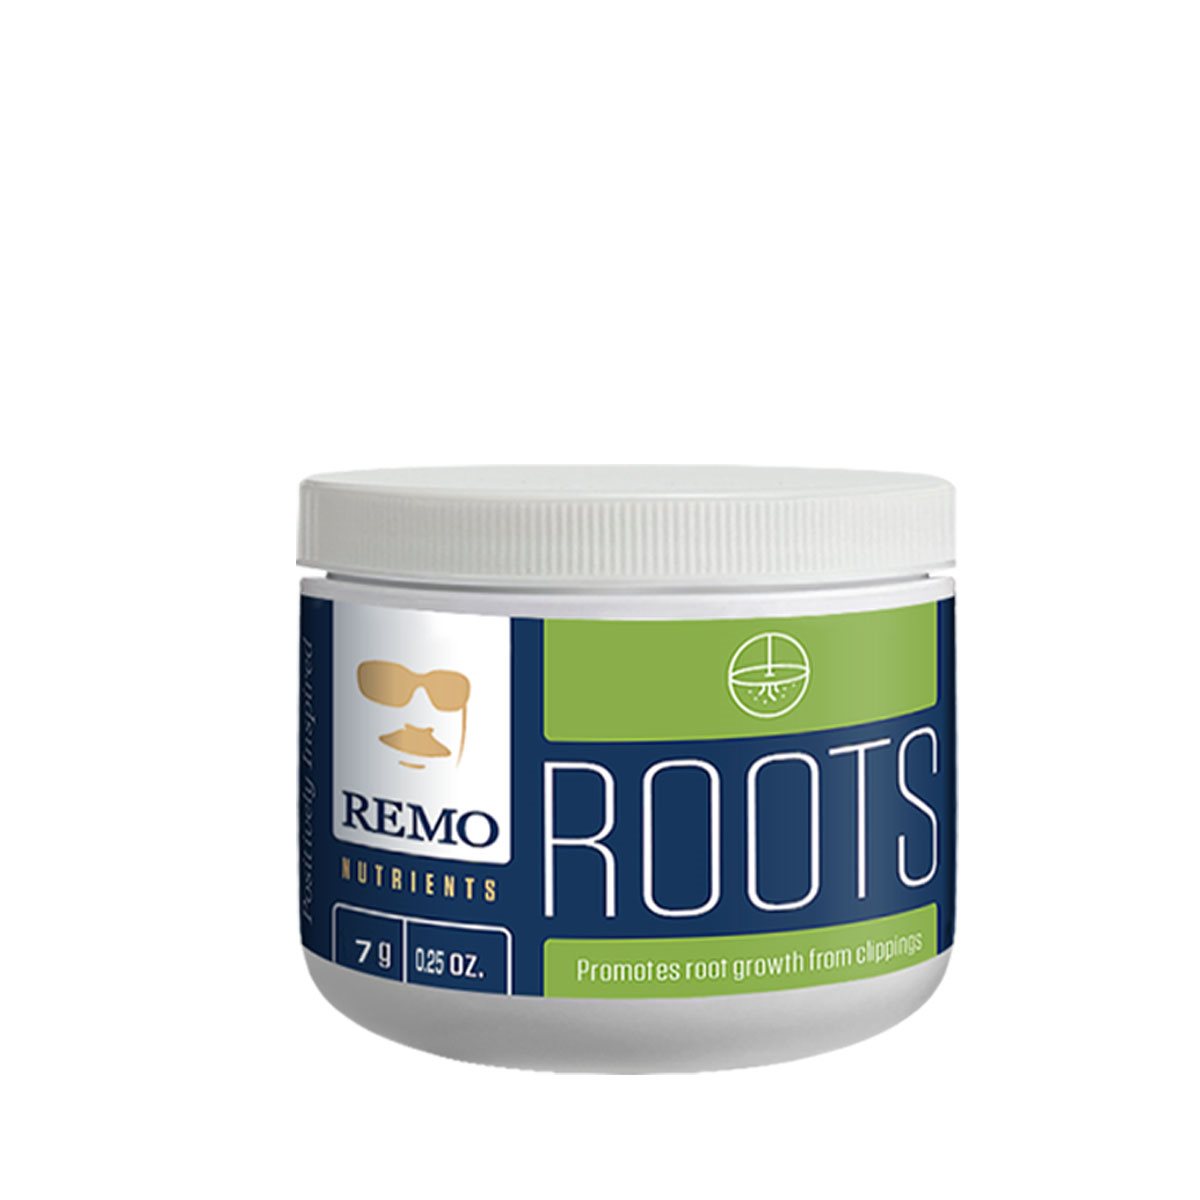 REMO'S ROOTS 7 GRAM - 16/BOX